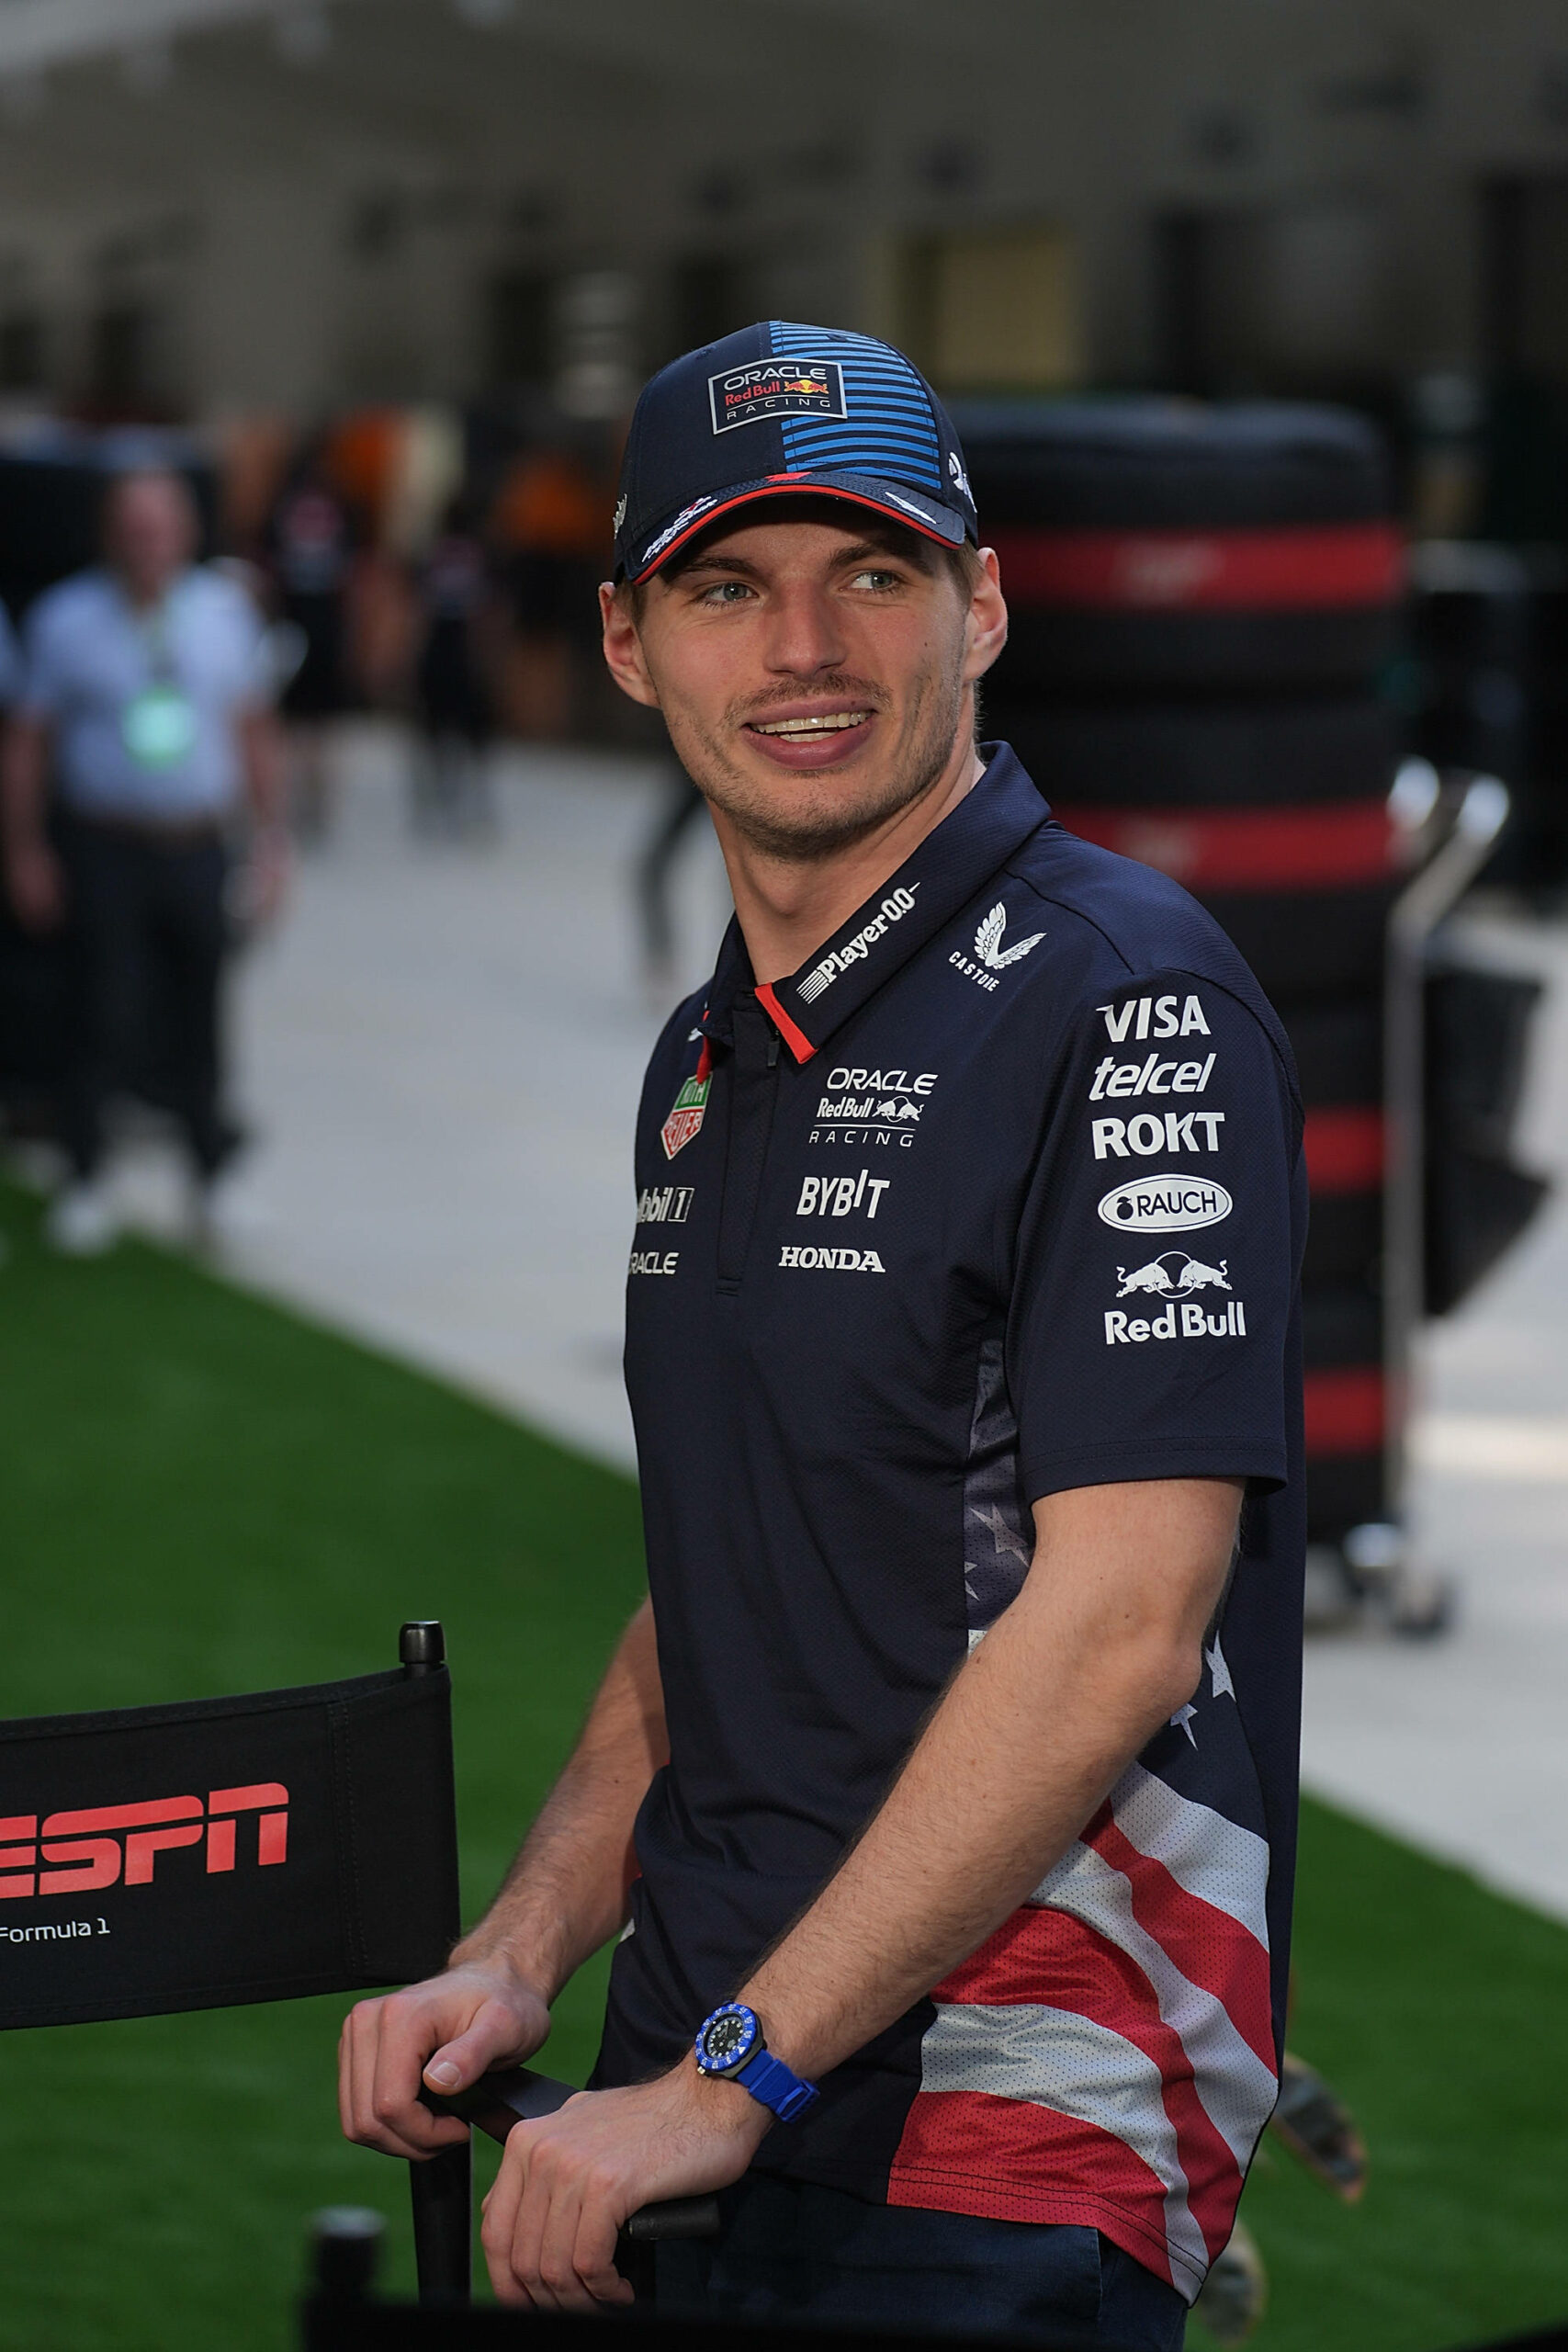 Max Verstappen vor dem Grand-Prix in Miami